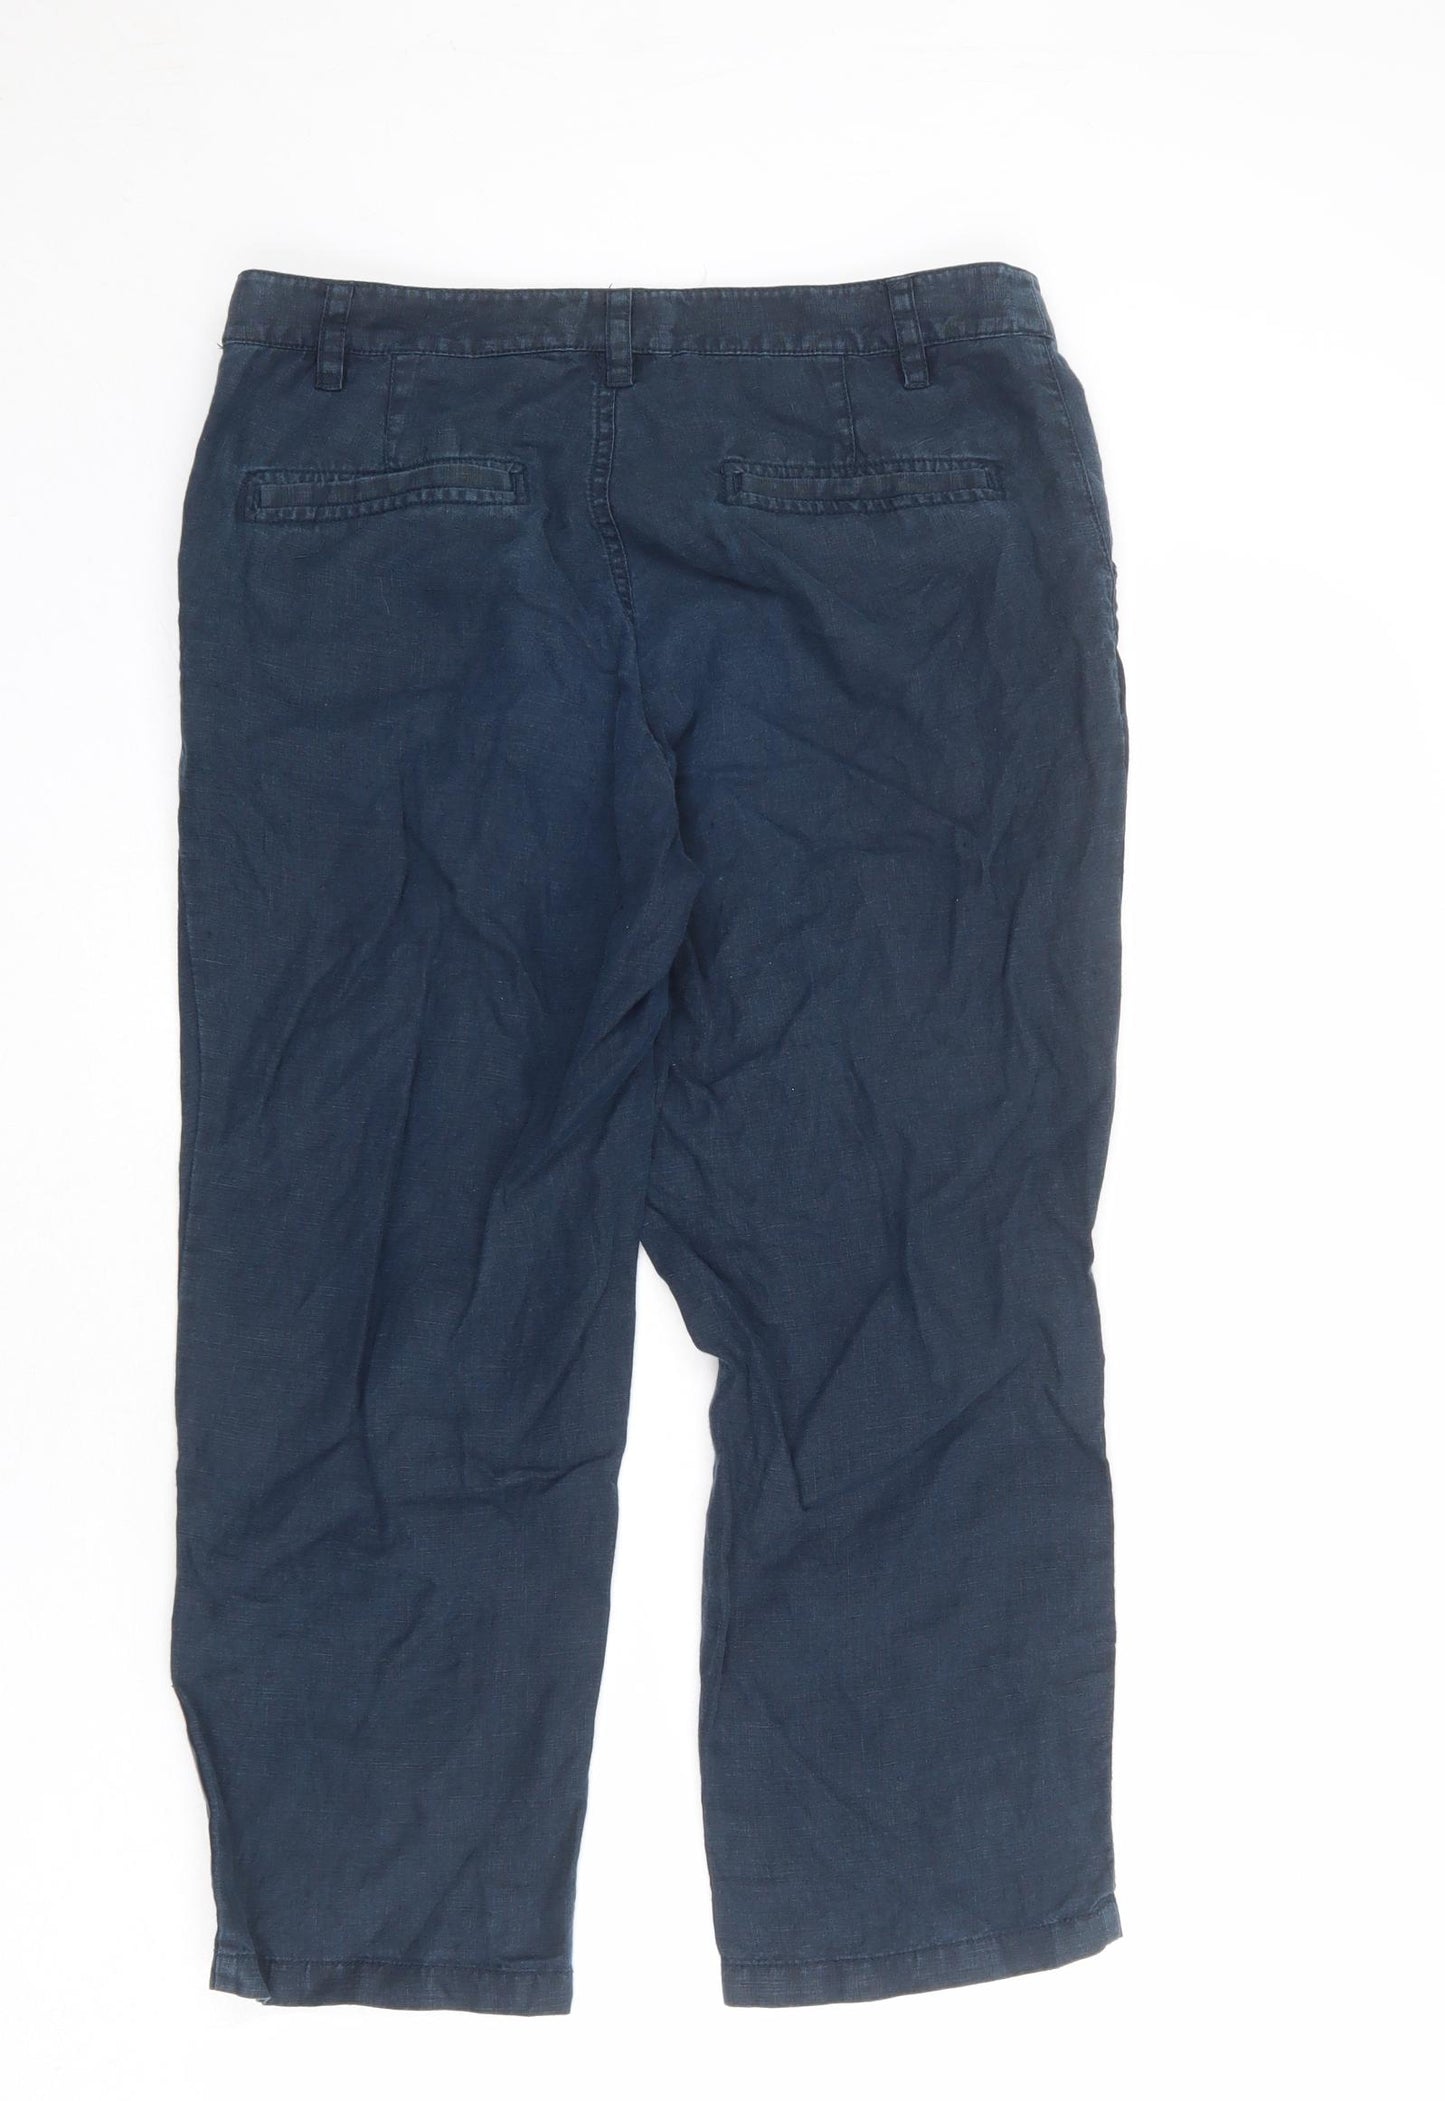 Fat Face Womens Blue Linen Trousers Size 10 L23 in Regular Zip